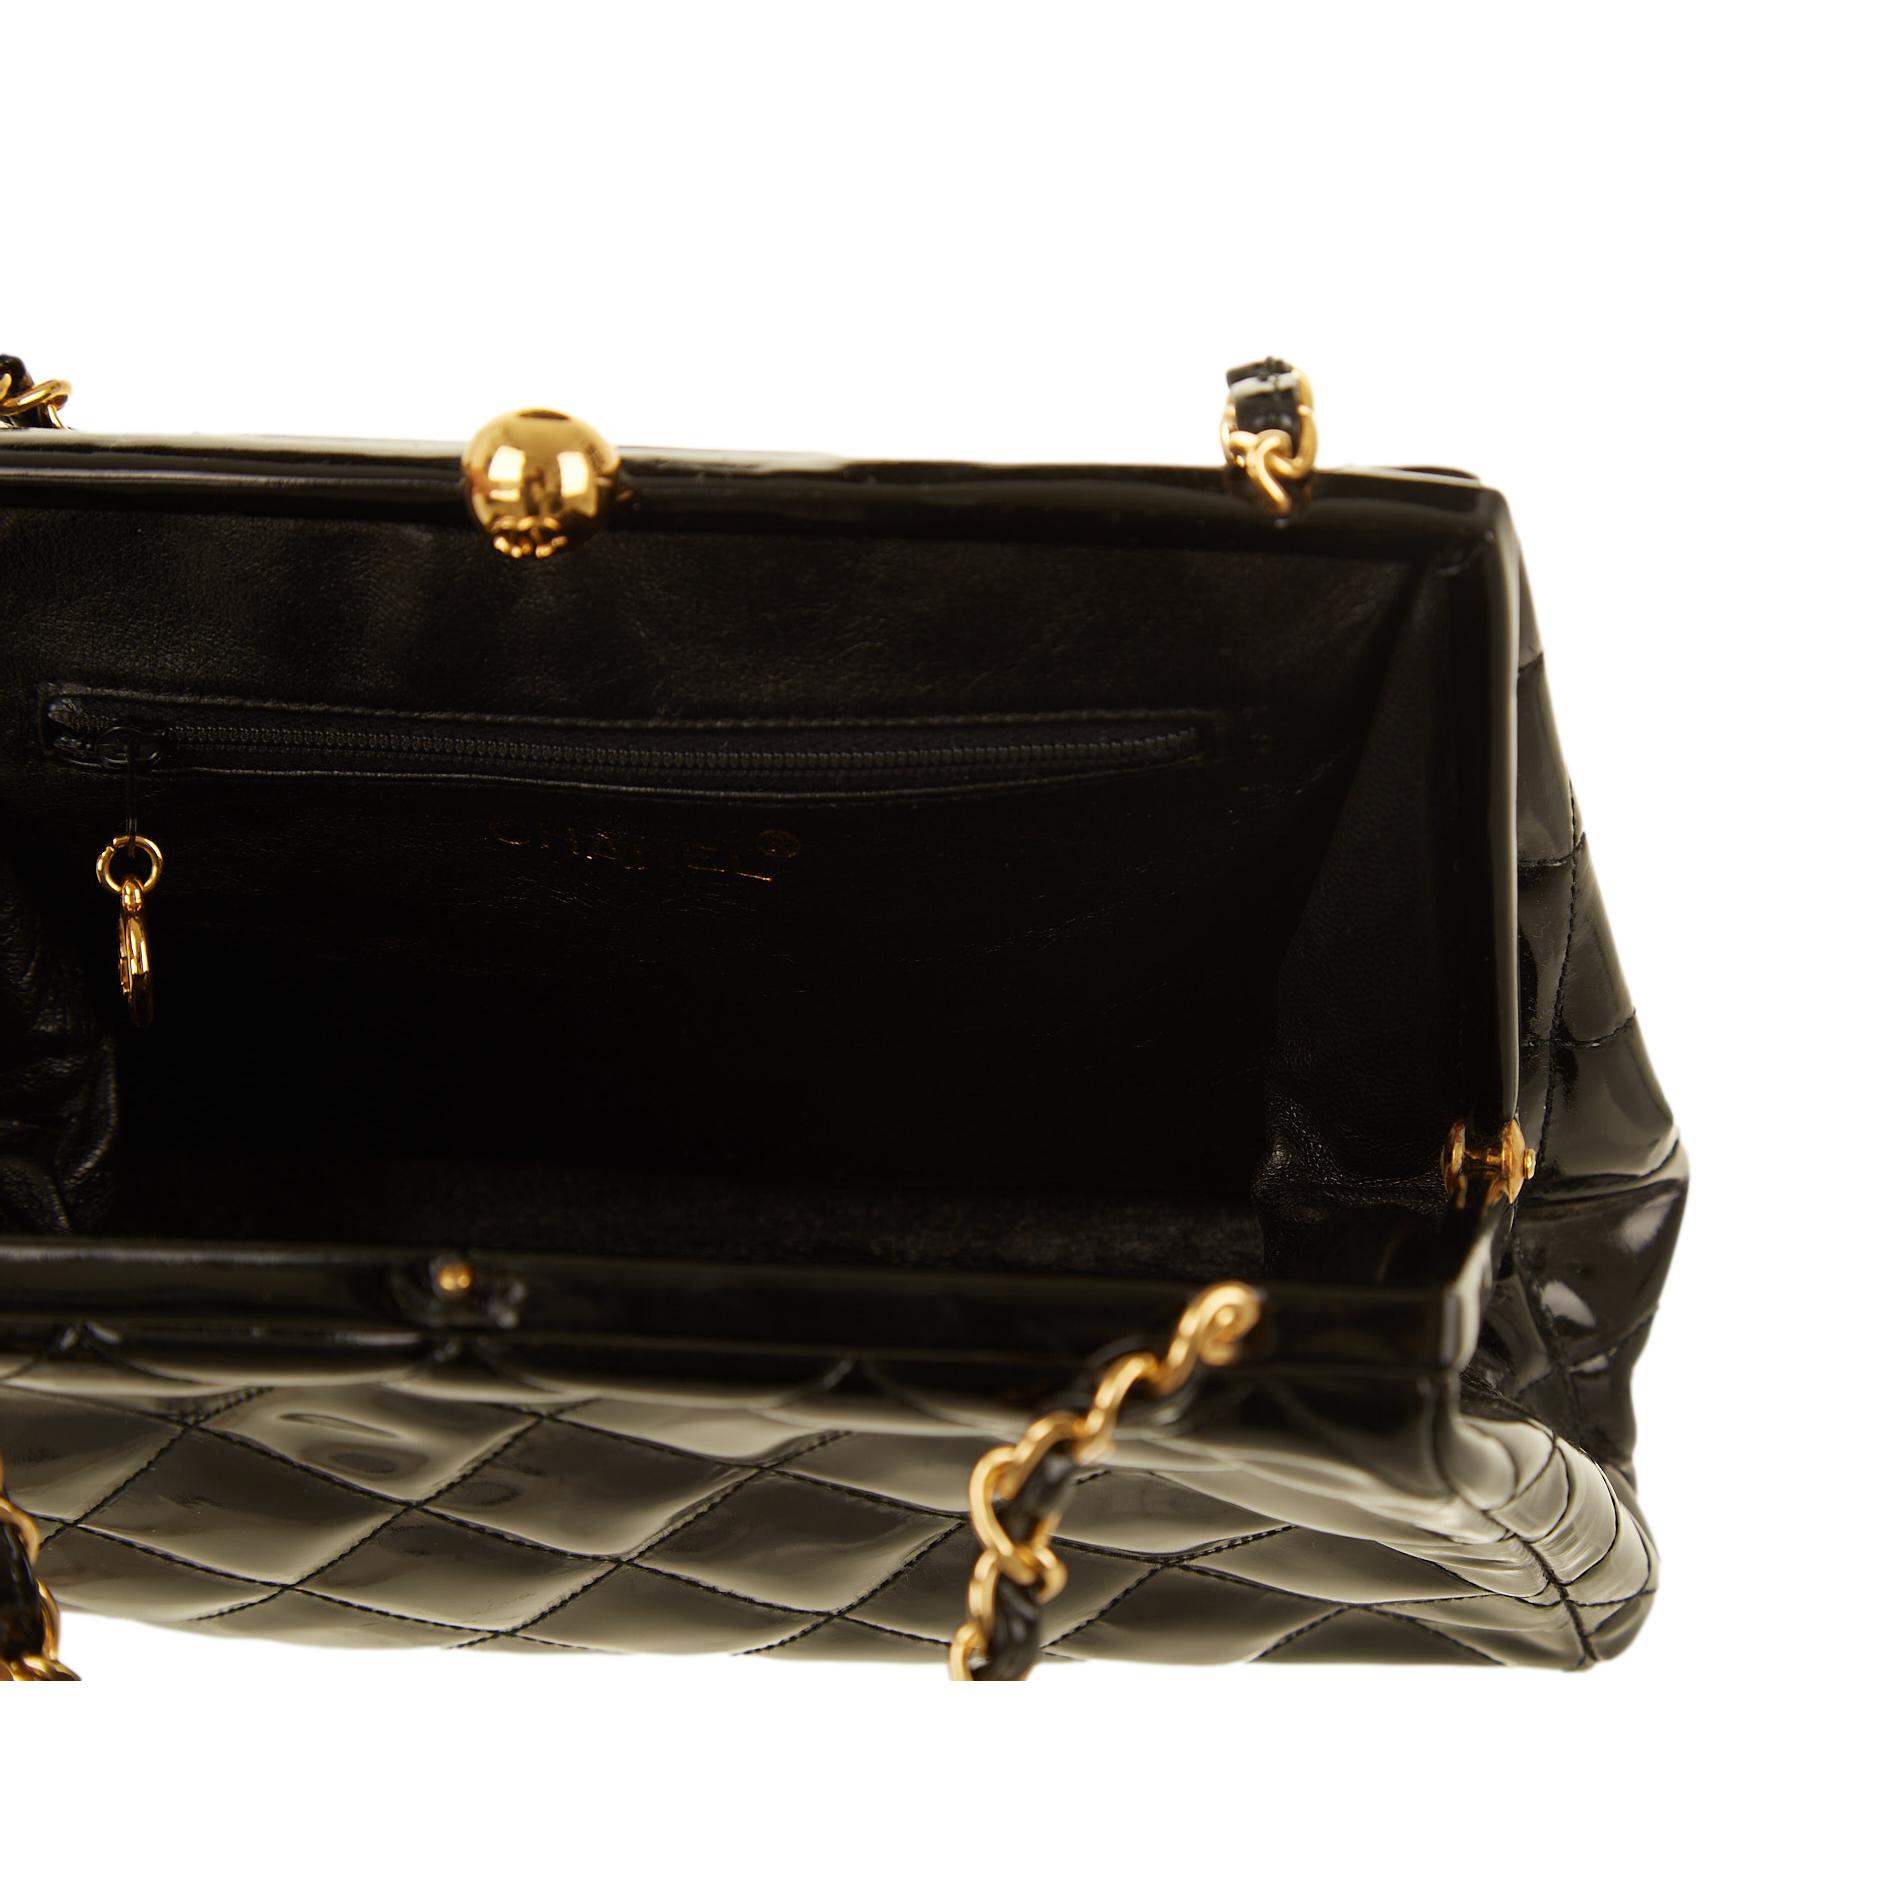 Chanel Black Patent Chain Shoulder Bag